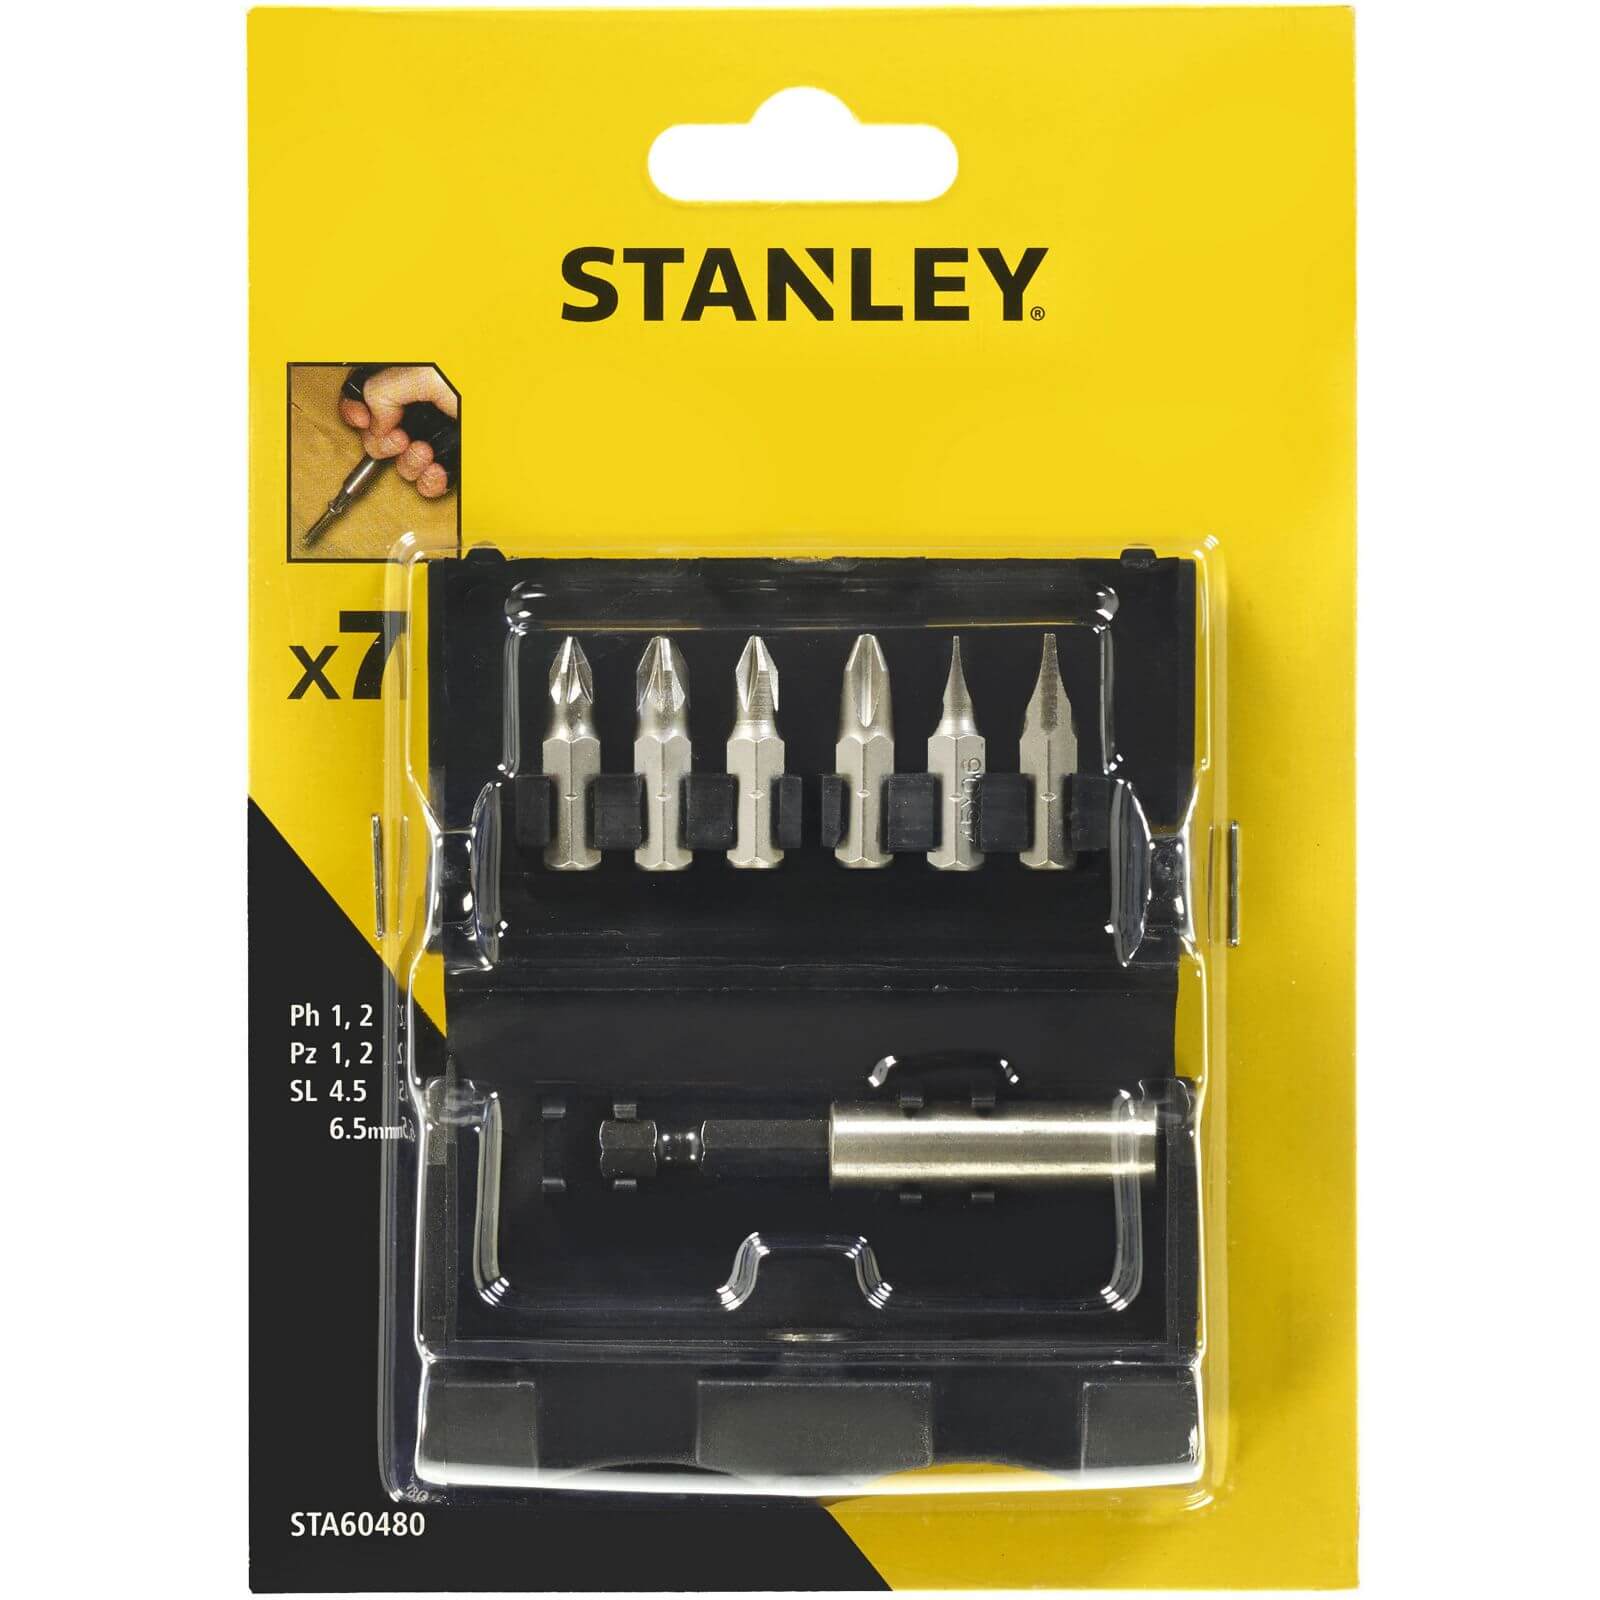 Stanley 6Pc Screwdriver Bit Set + Handle - STA60480-XJ